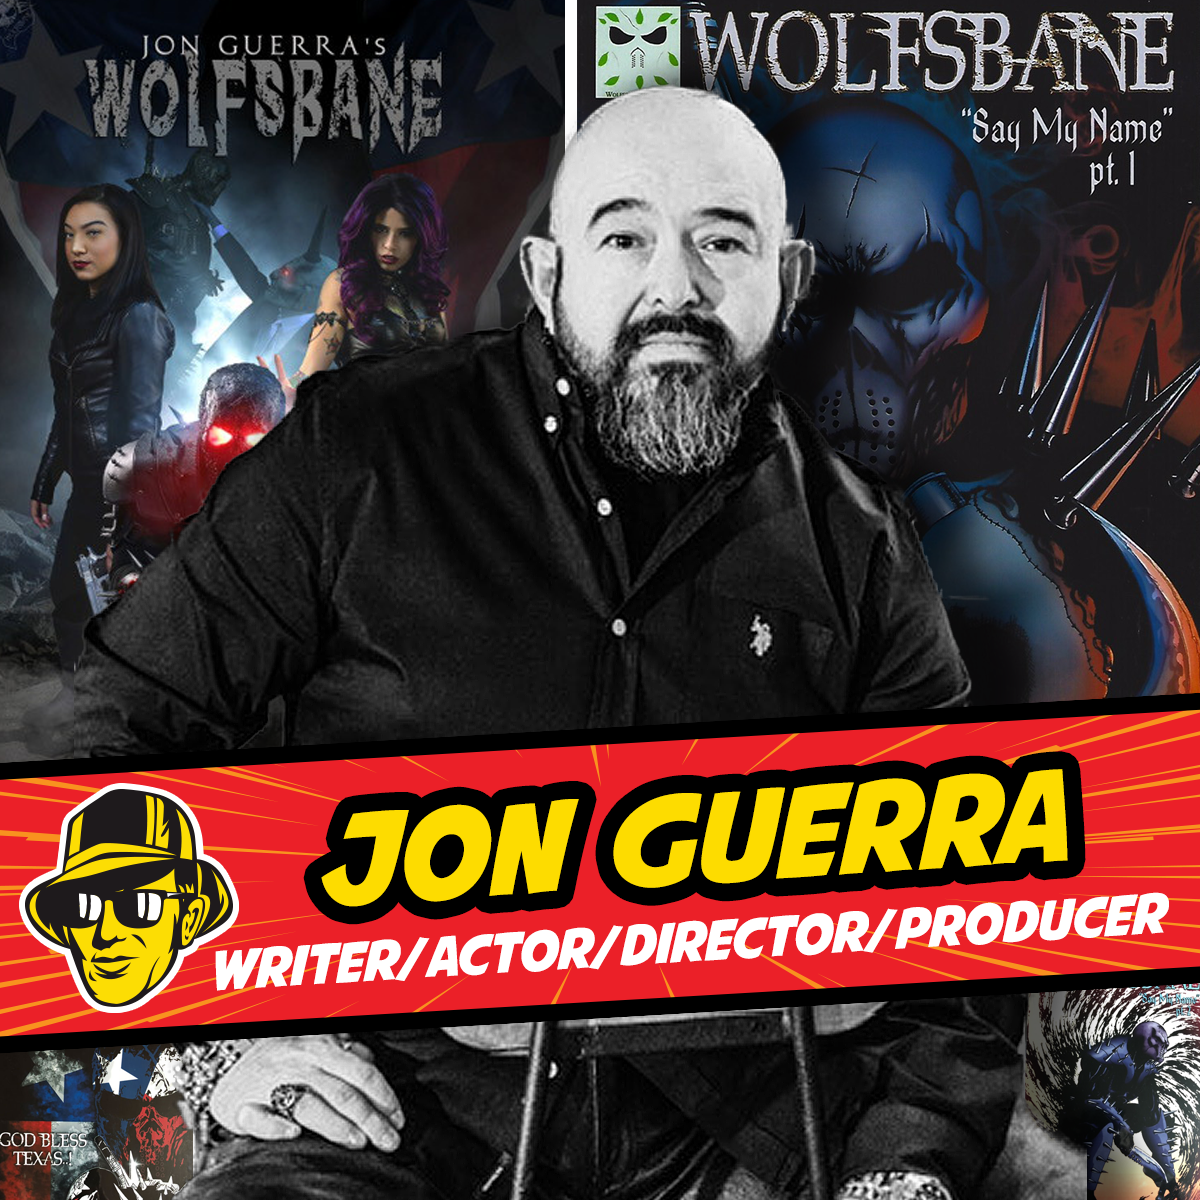 Jon Guerra headshot with Wolfsbane